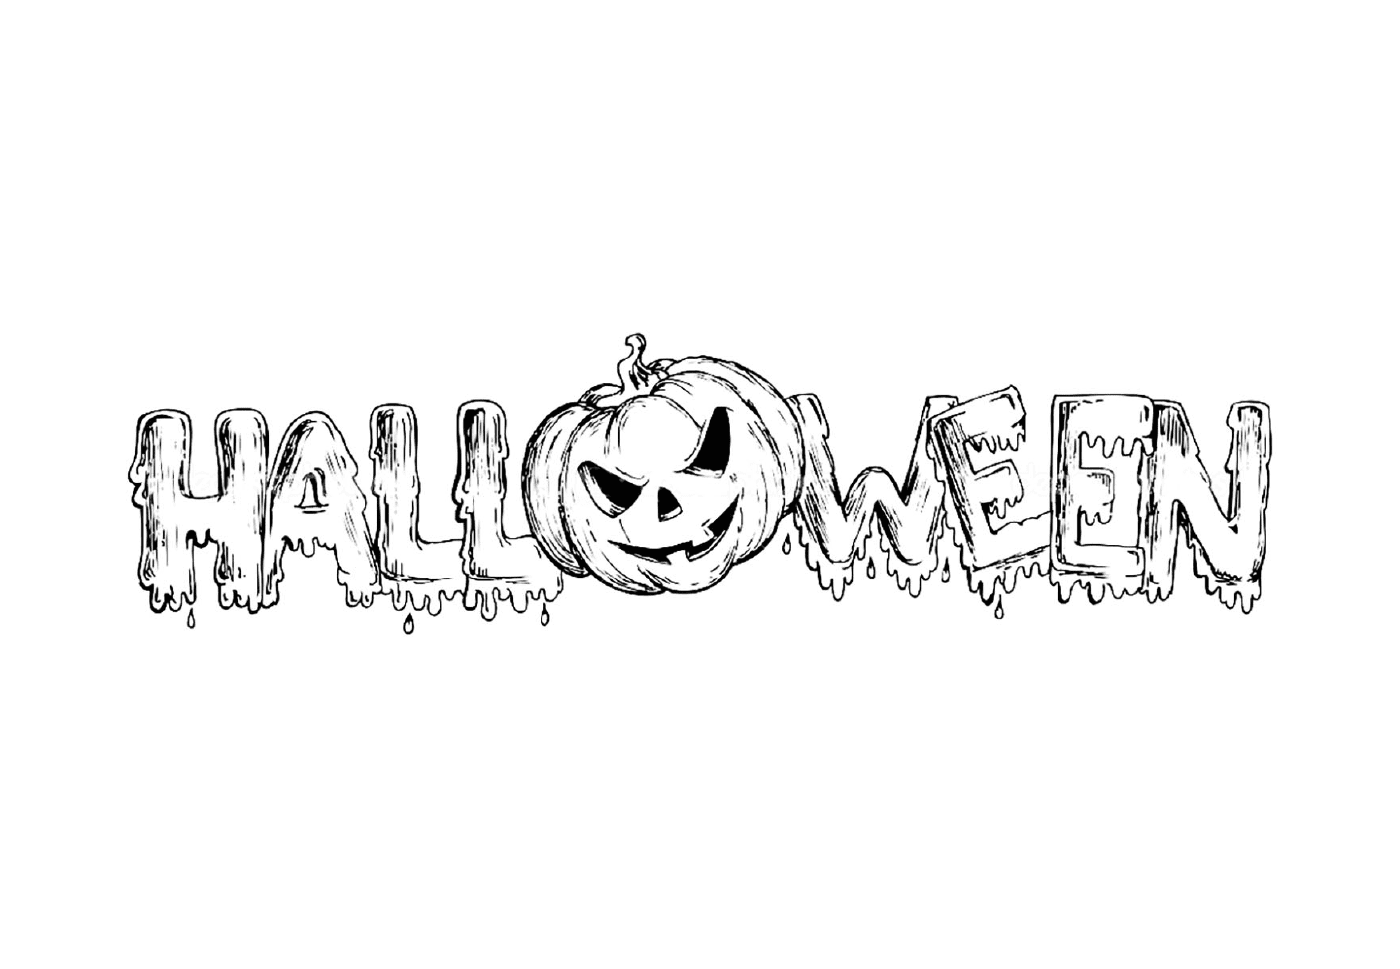  Pumpkin and the word Halloween 